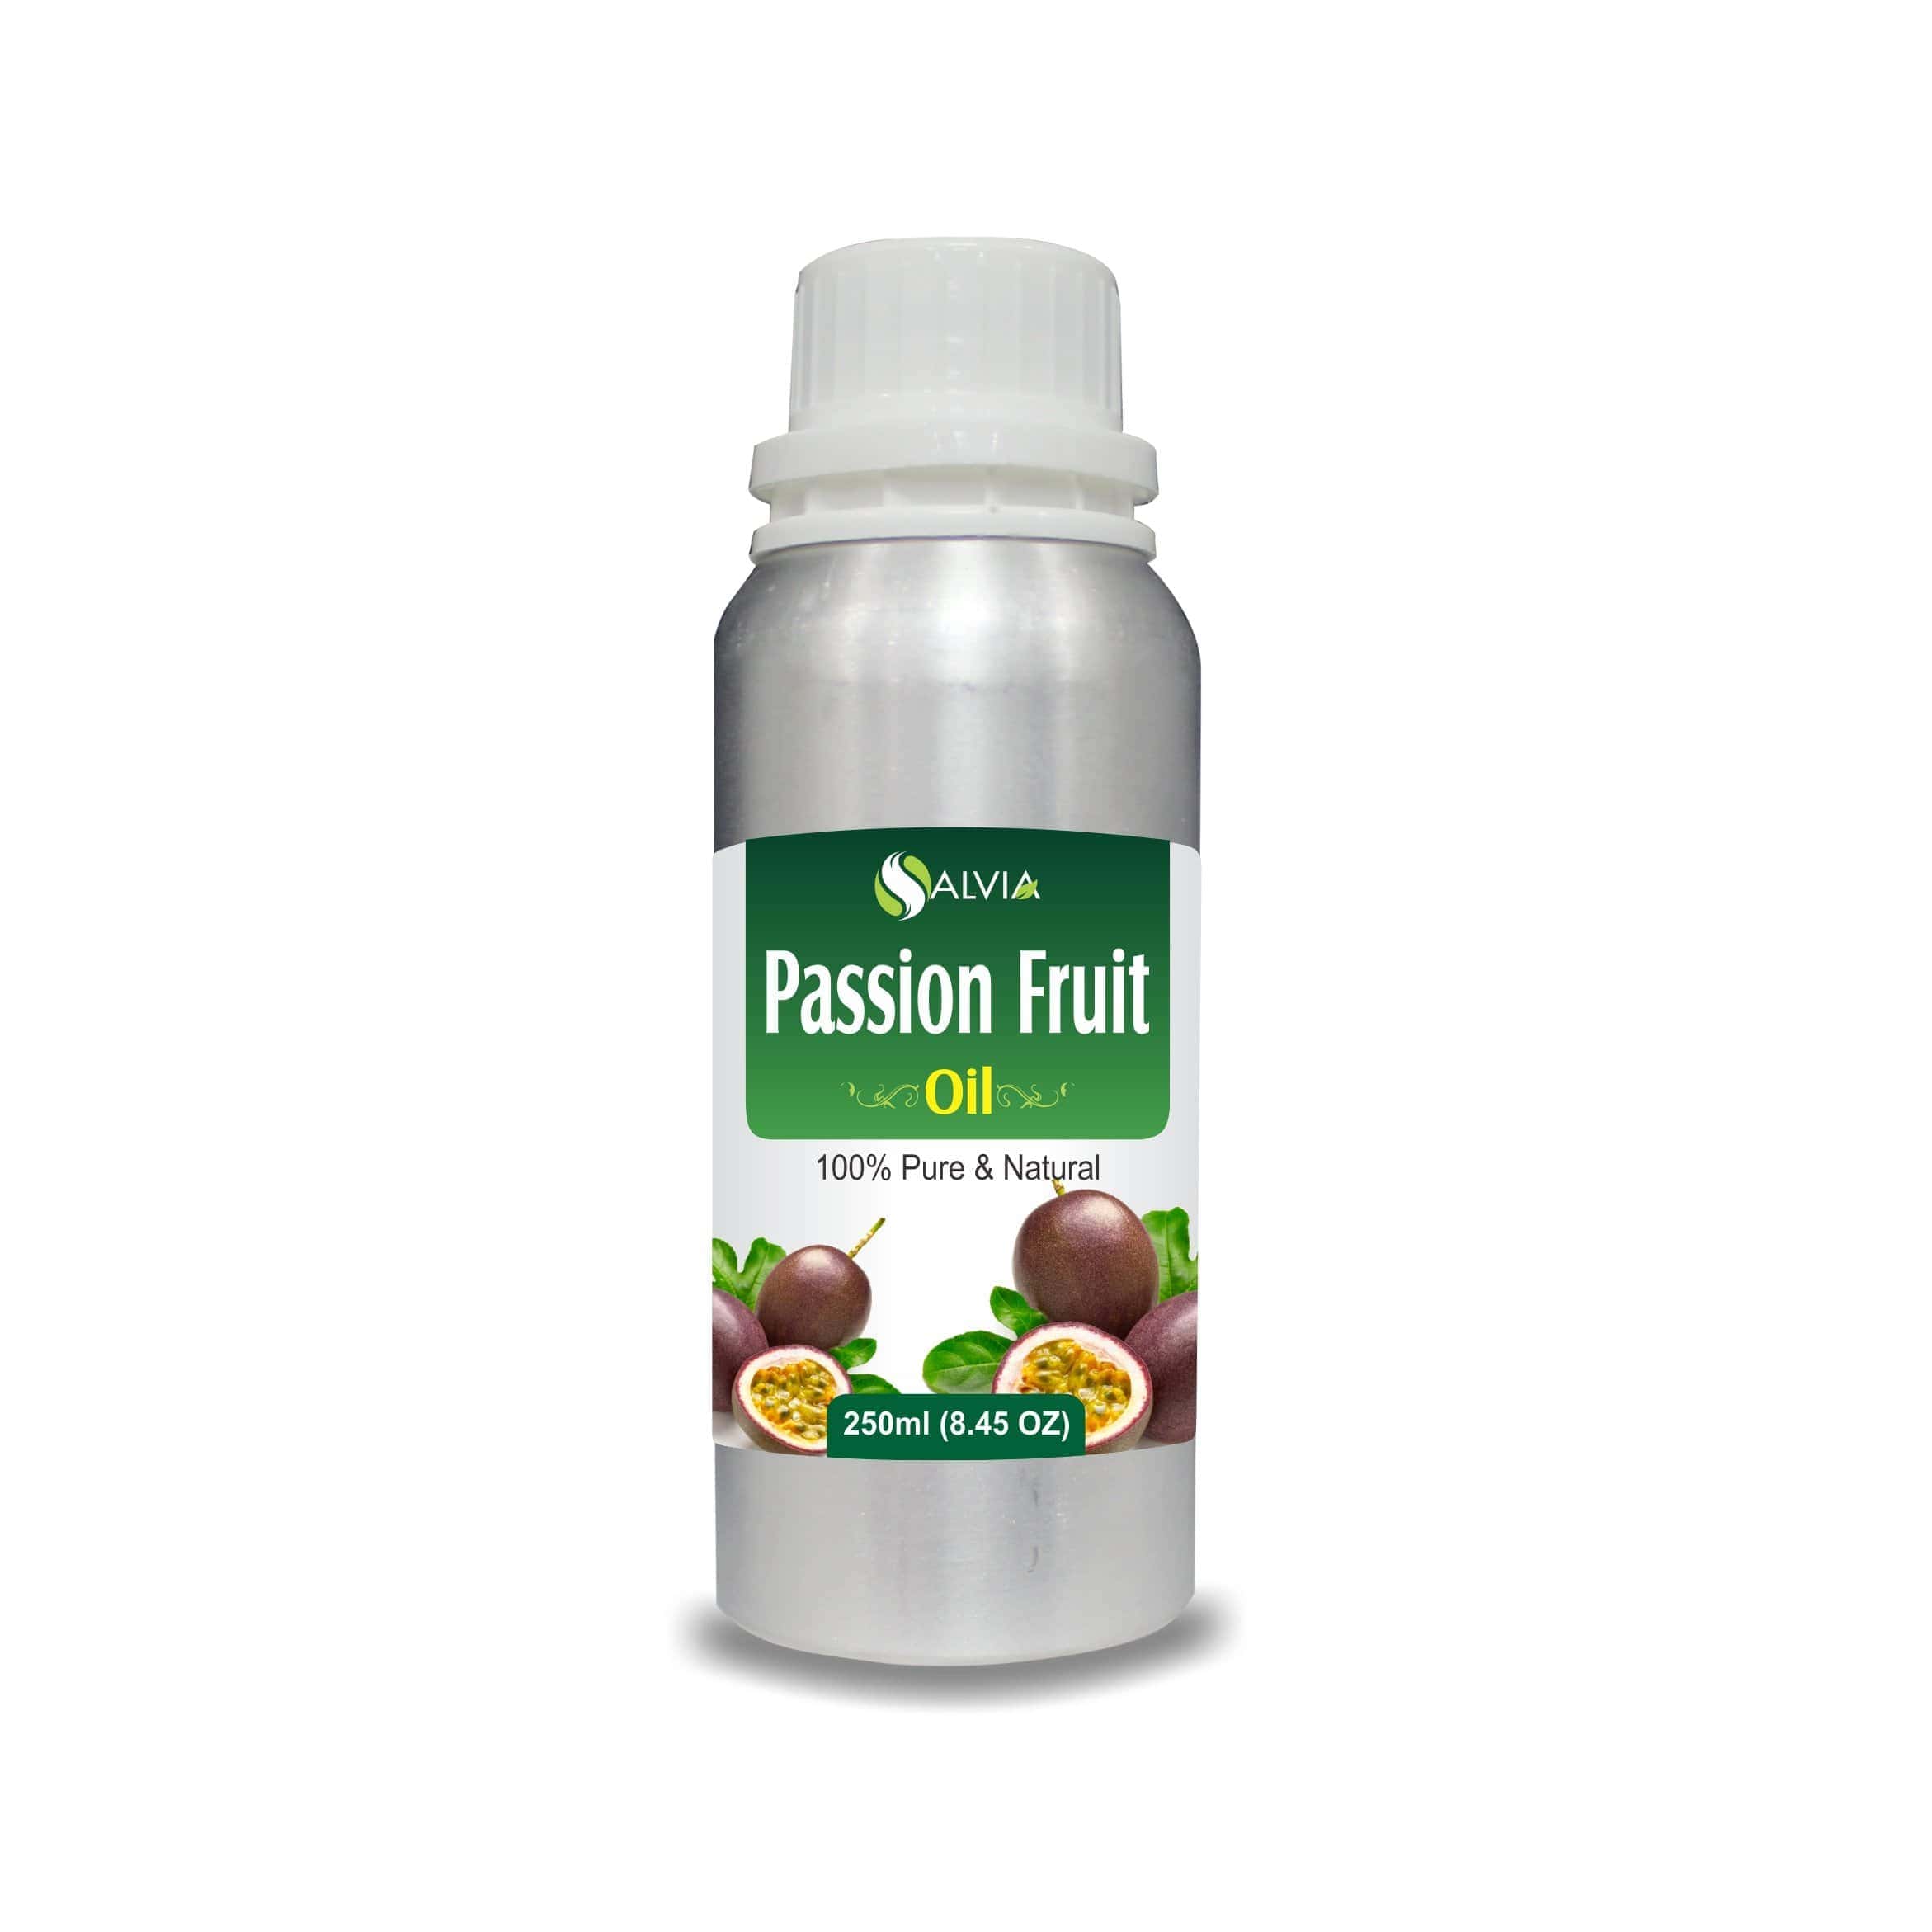 Passion Fruit  oil benefits 